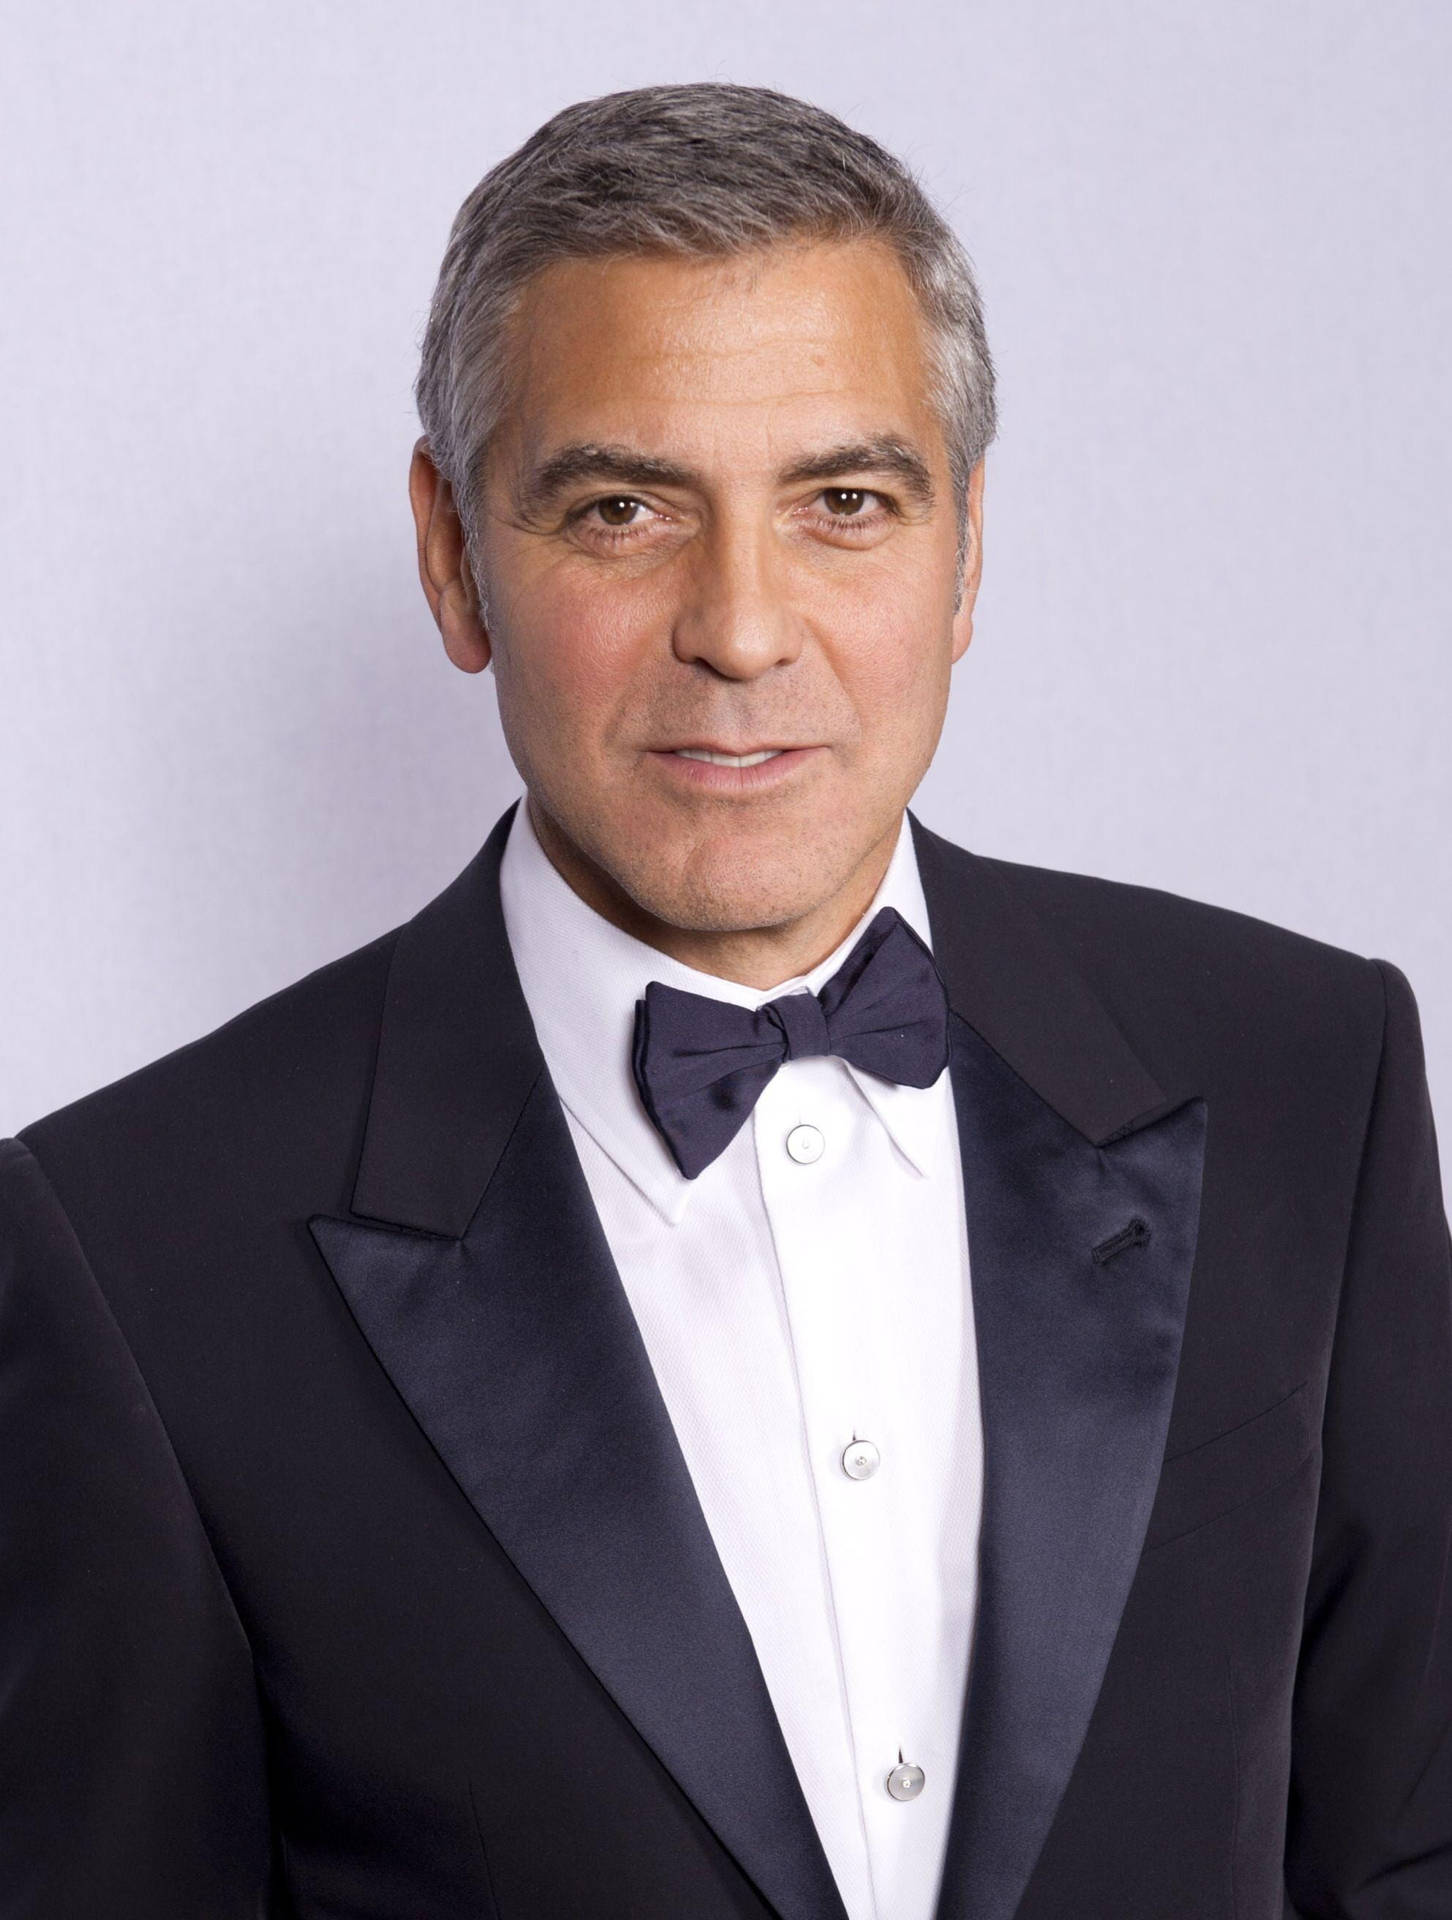 George Clooney Formal Attire Wallpaper